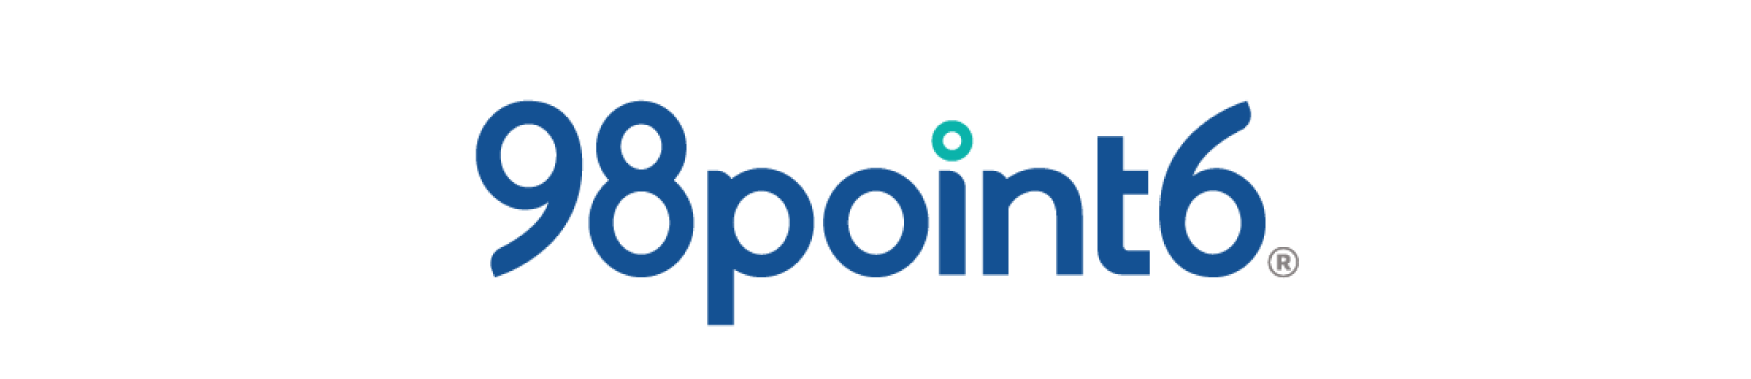 98point6 logo